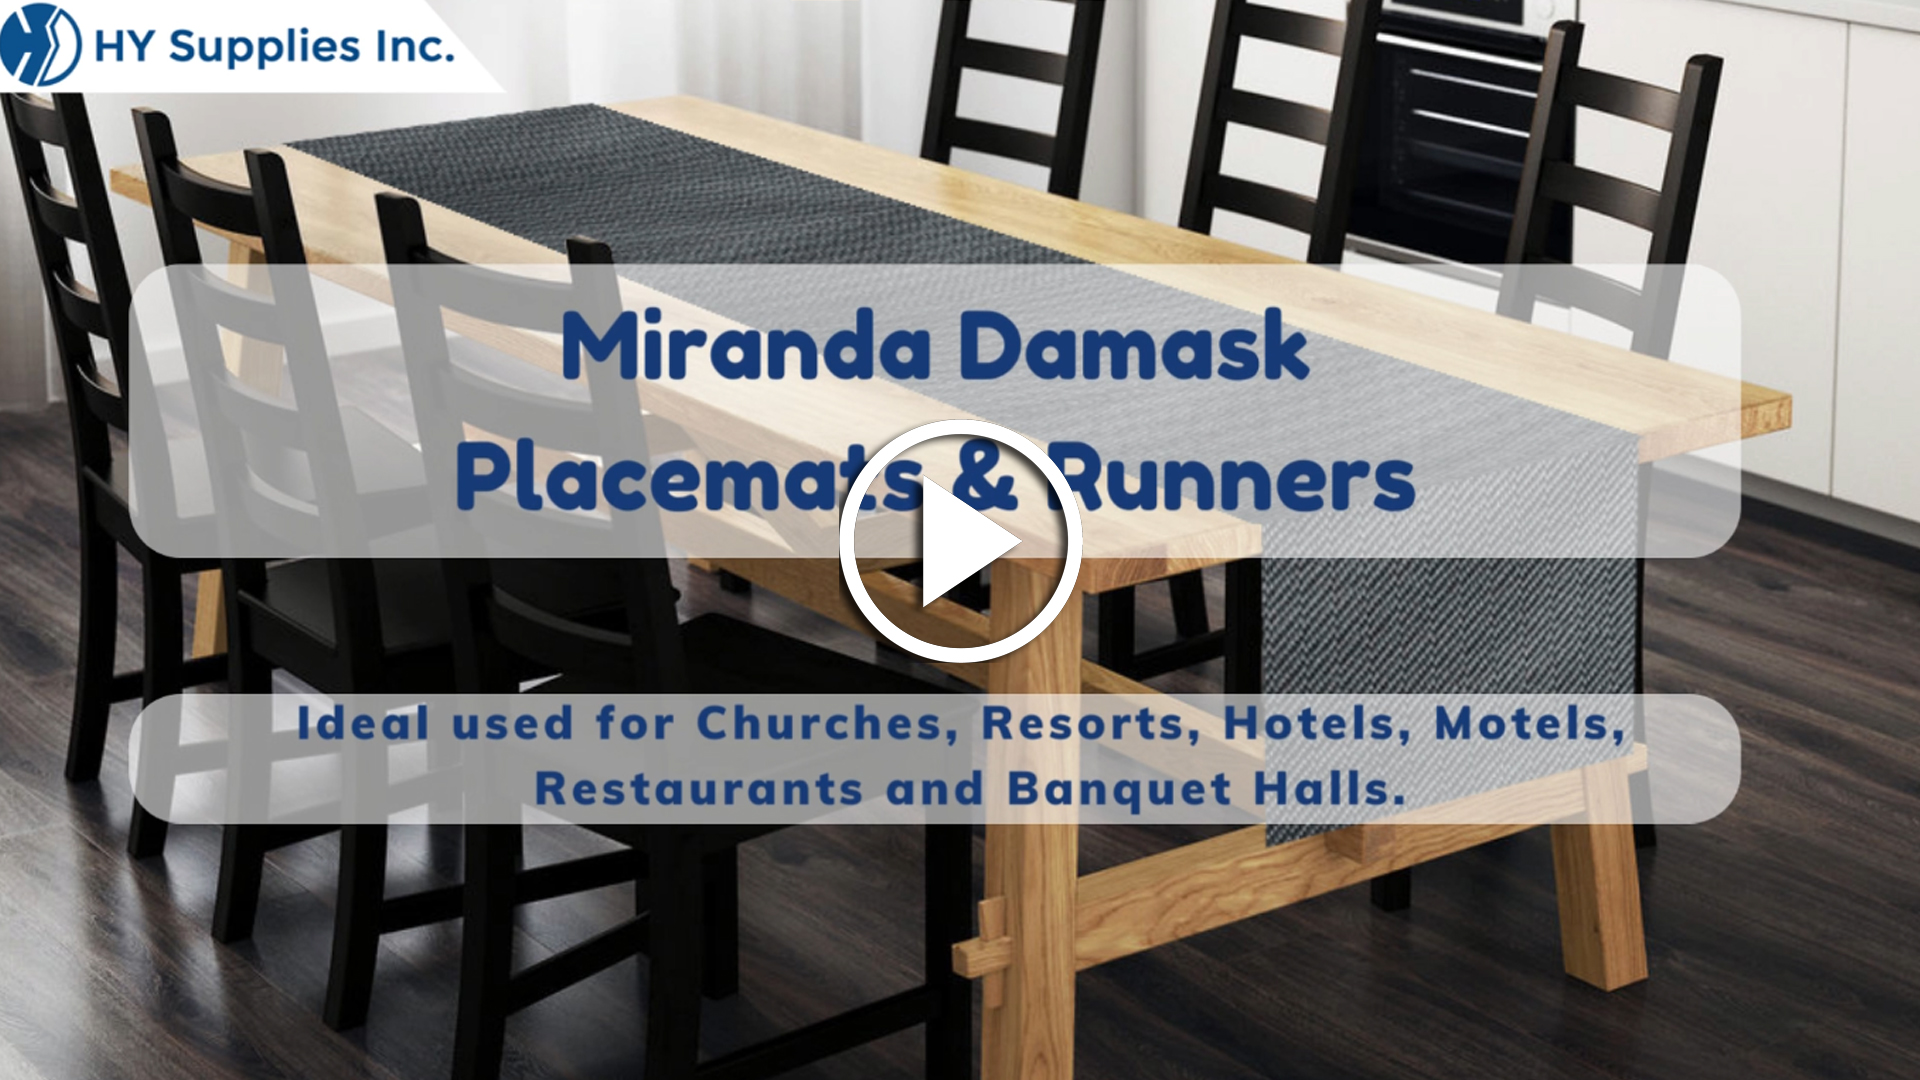 Miranda Damask Placemats & Runners